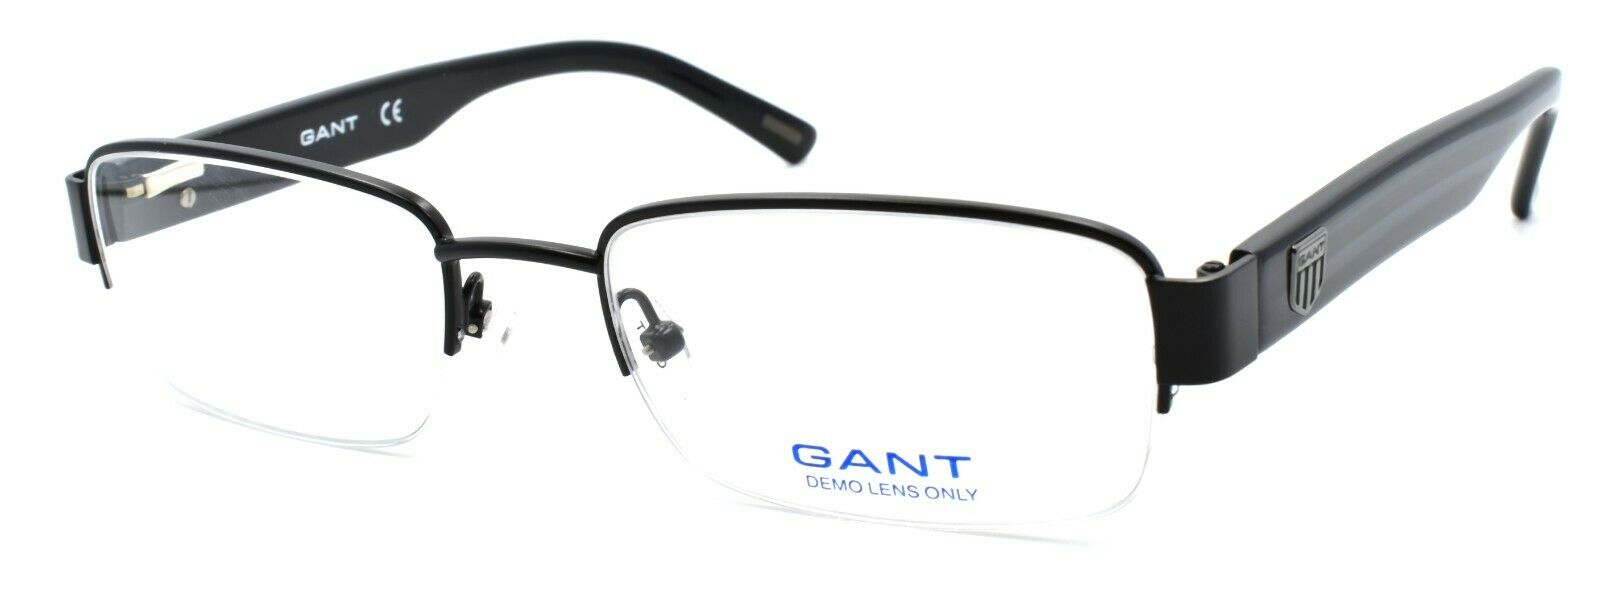 1-GANT G Pearl SBLK Men's Eyeglasses Frames Half-rim 53-19-140 Satin Black-715583173613-IKSpecs